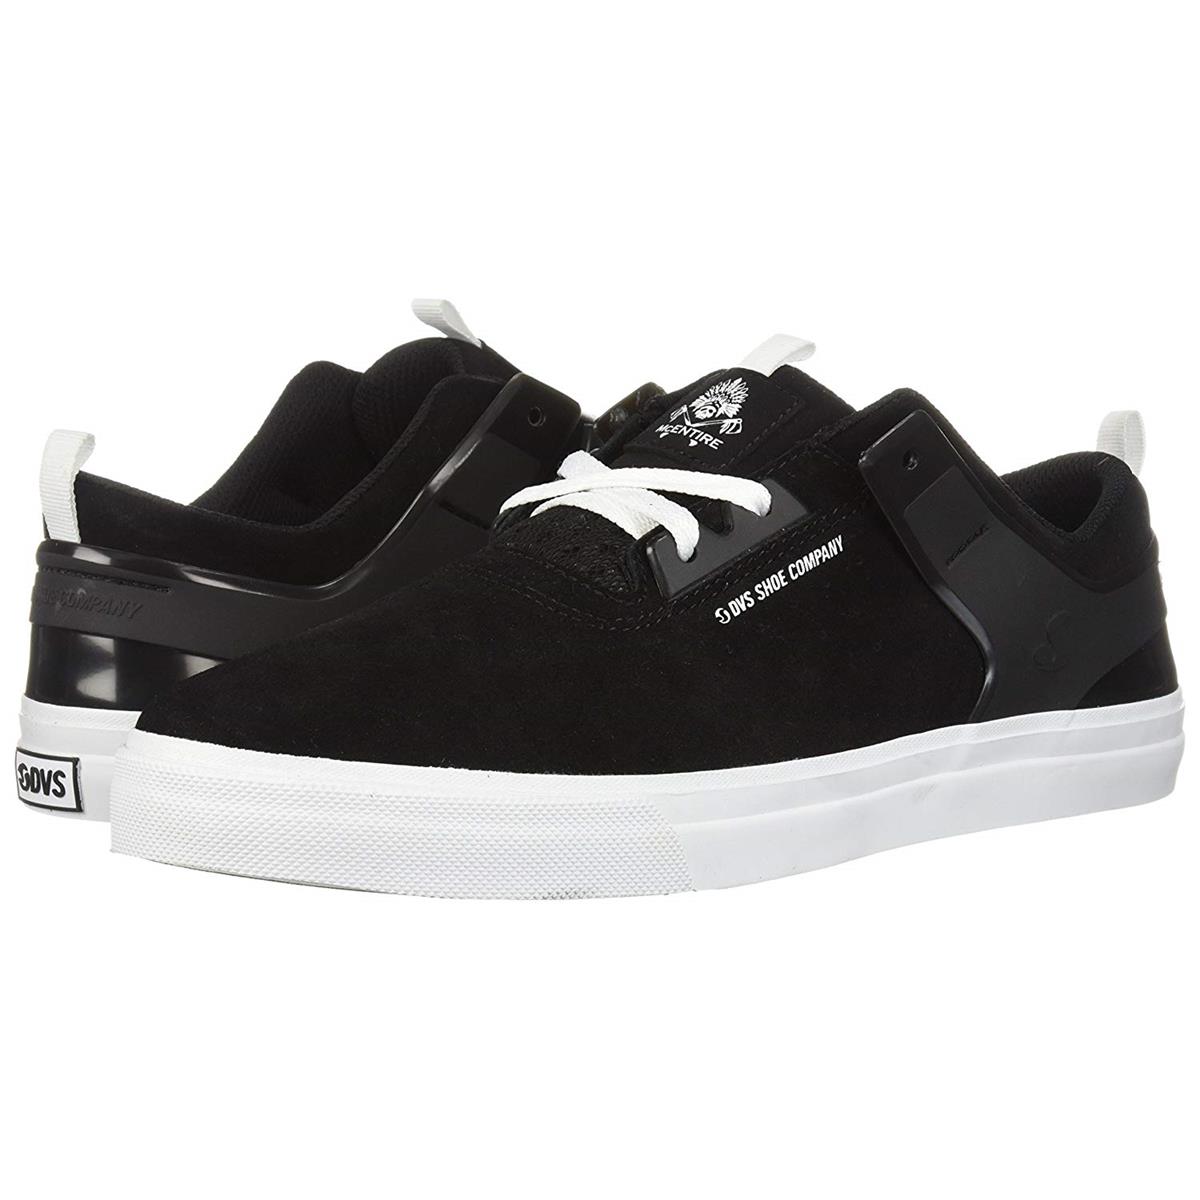 DVS Shoes Cinch CT+ Black/White/Suede